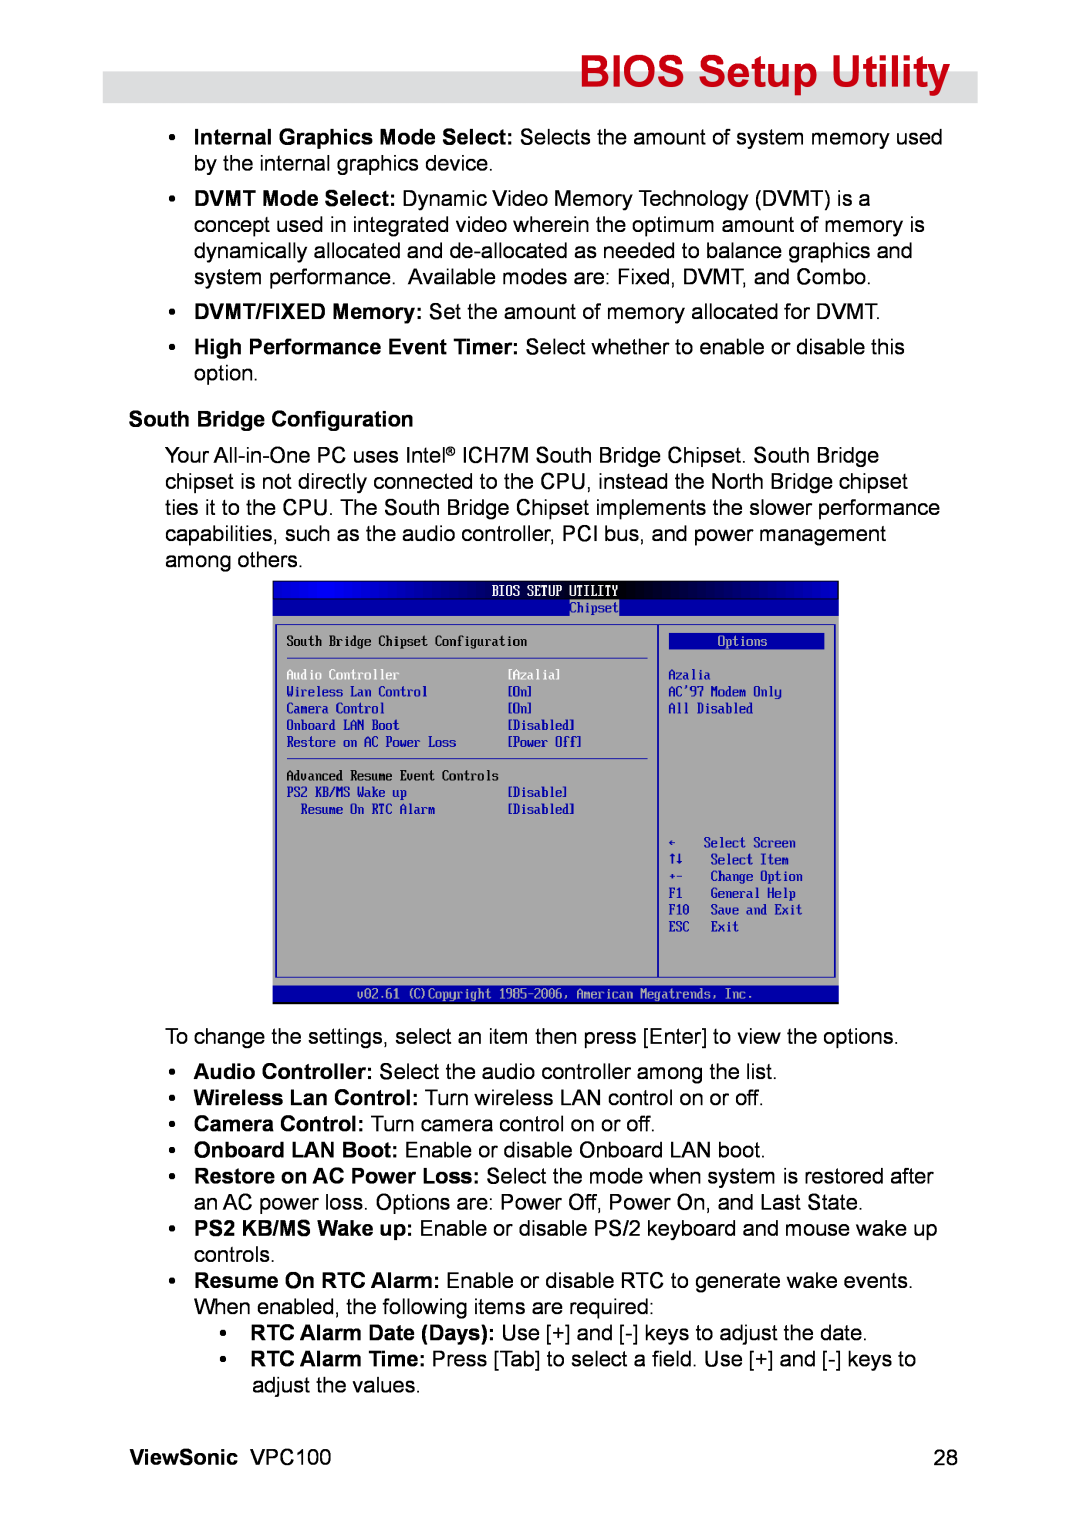 ViewSonic manual South Bridge Configuration, BIOS Setup Utility, ViewSonic VPC100 